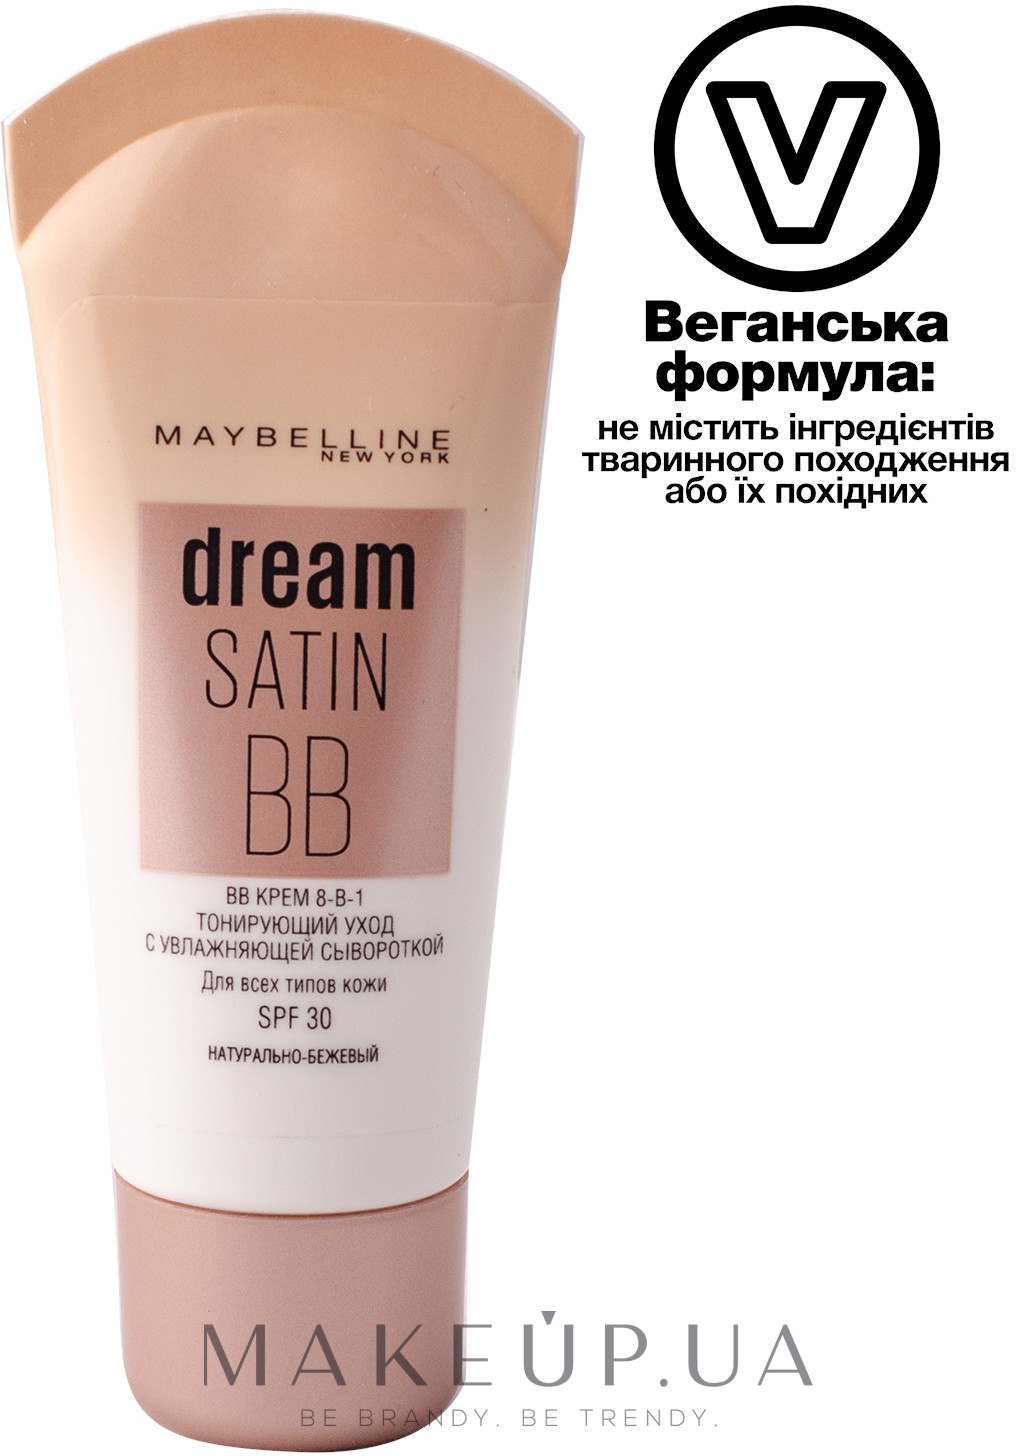 Maybelline New York Dream Satin BB Cream 8 in 1